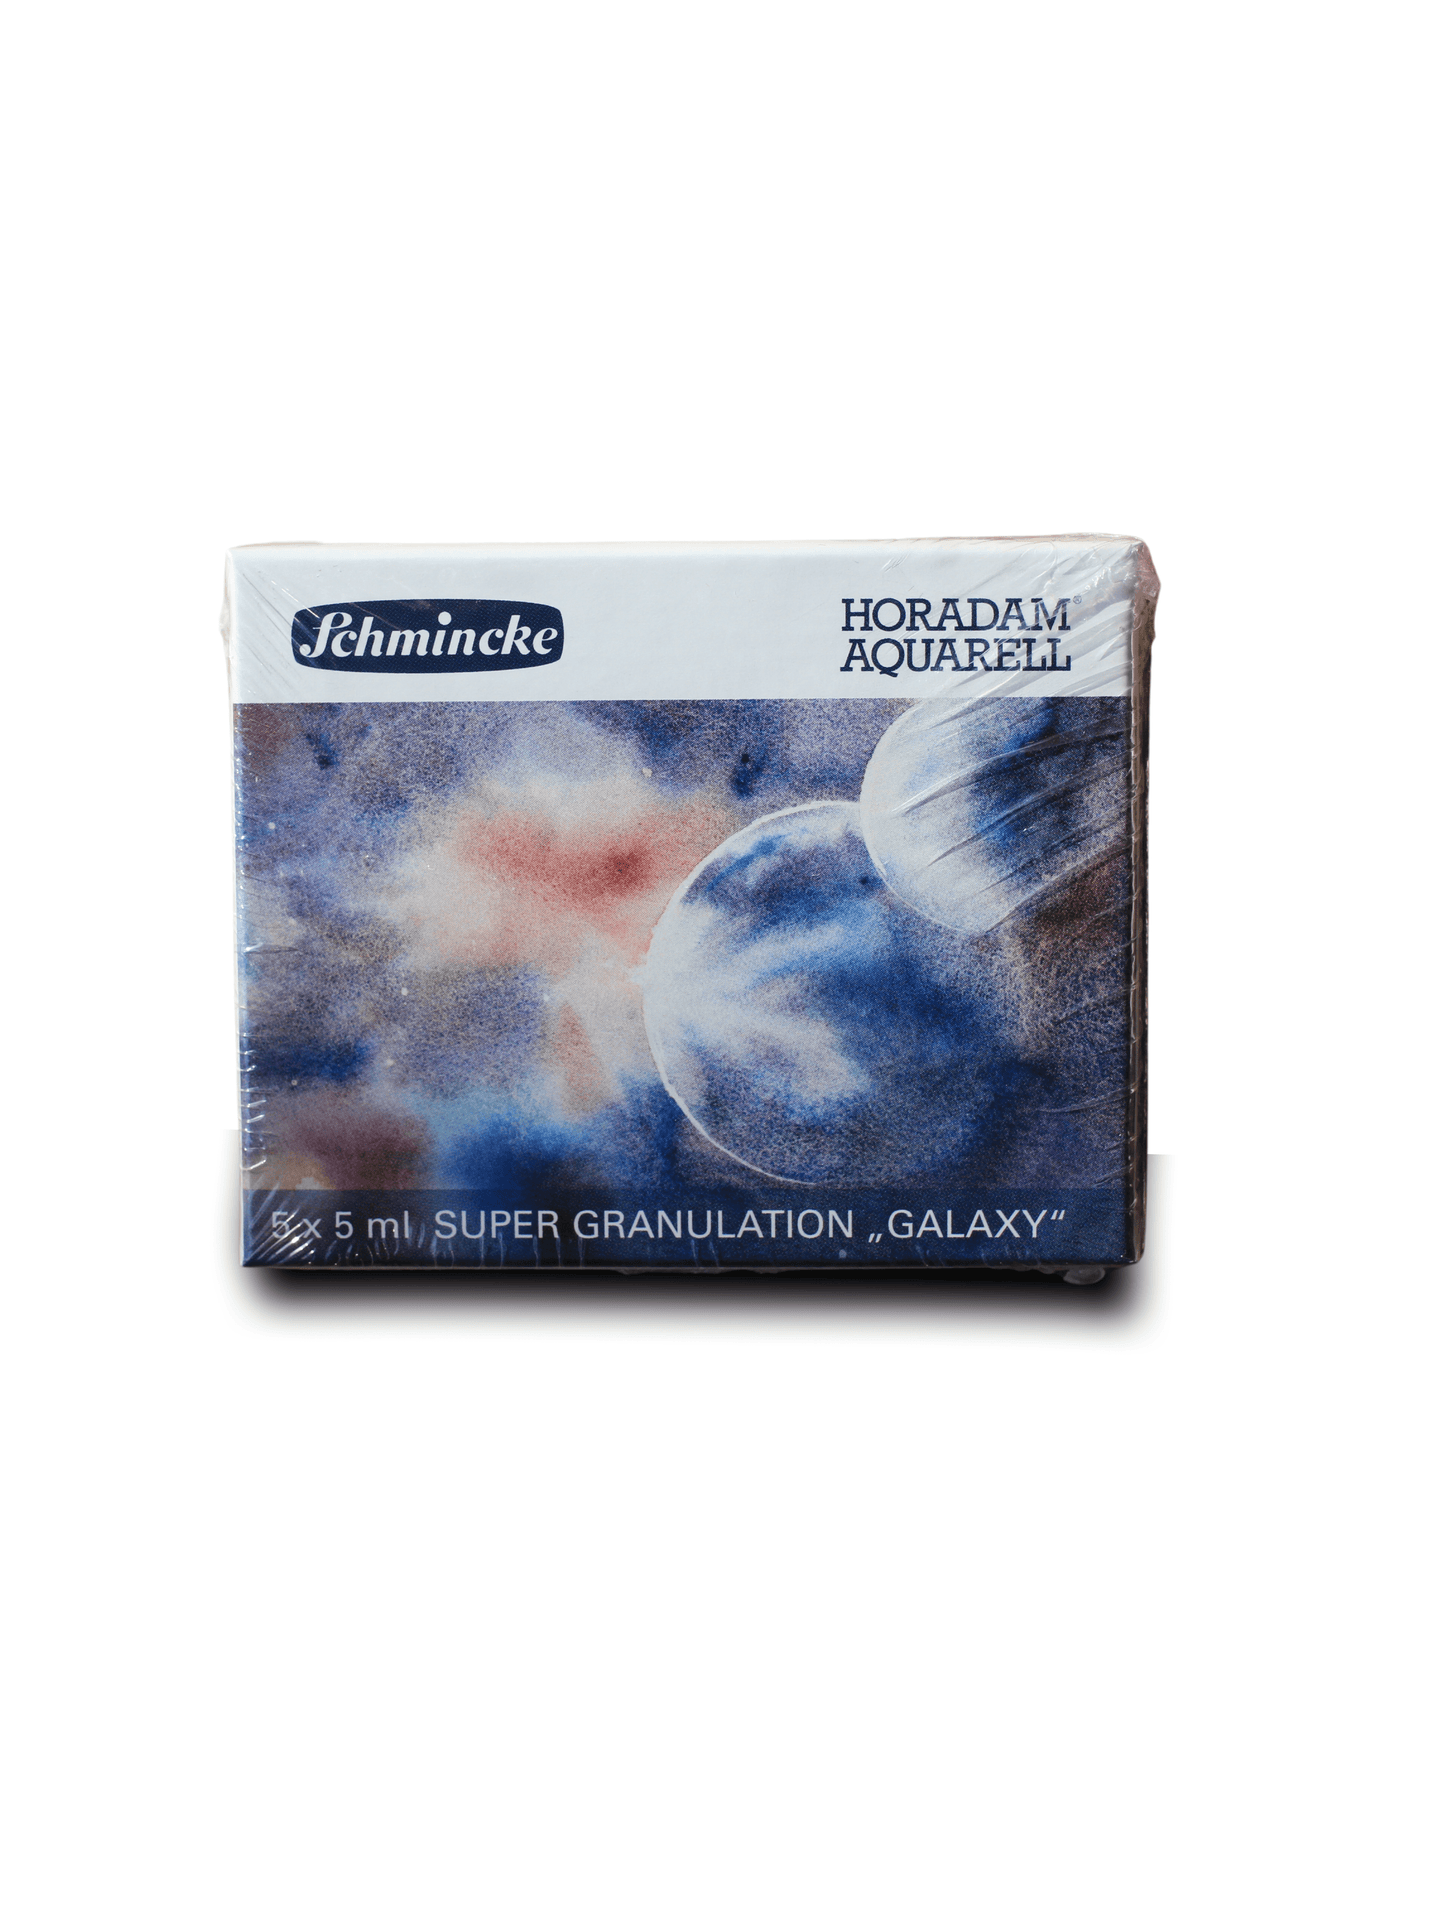 Schmincke WATERCOLOUR TUBE SET Galaxy Schmincke - Horadam Aquarelle - Super Granulation Watercolours - Sets of 5x5mL Tubes